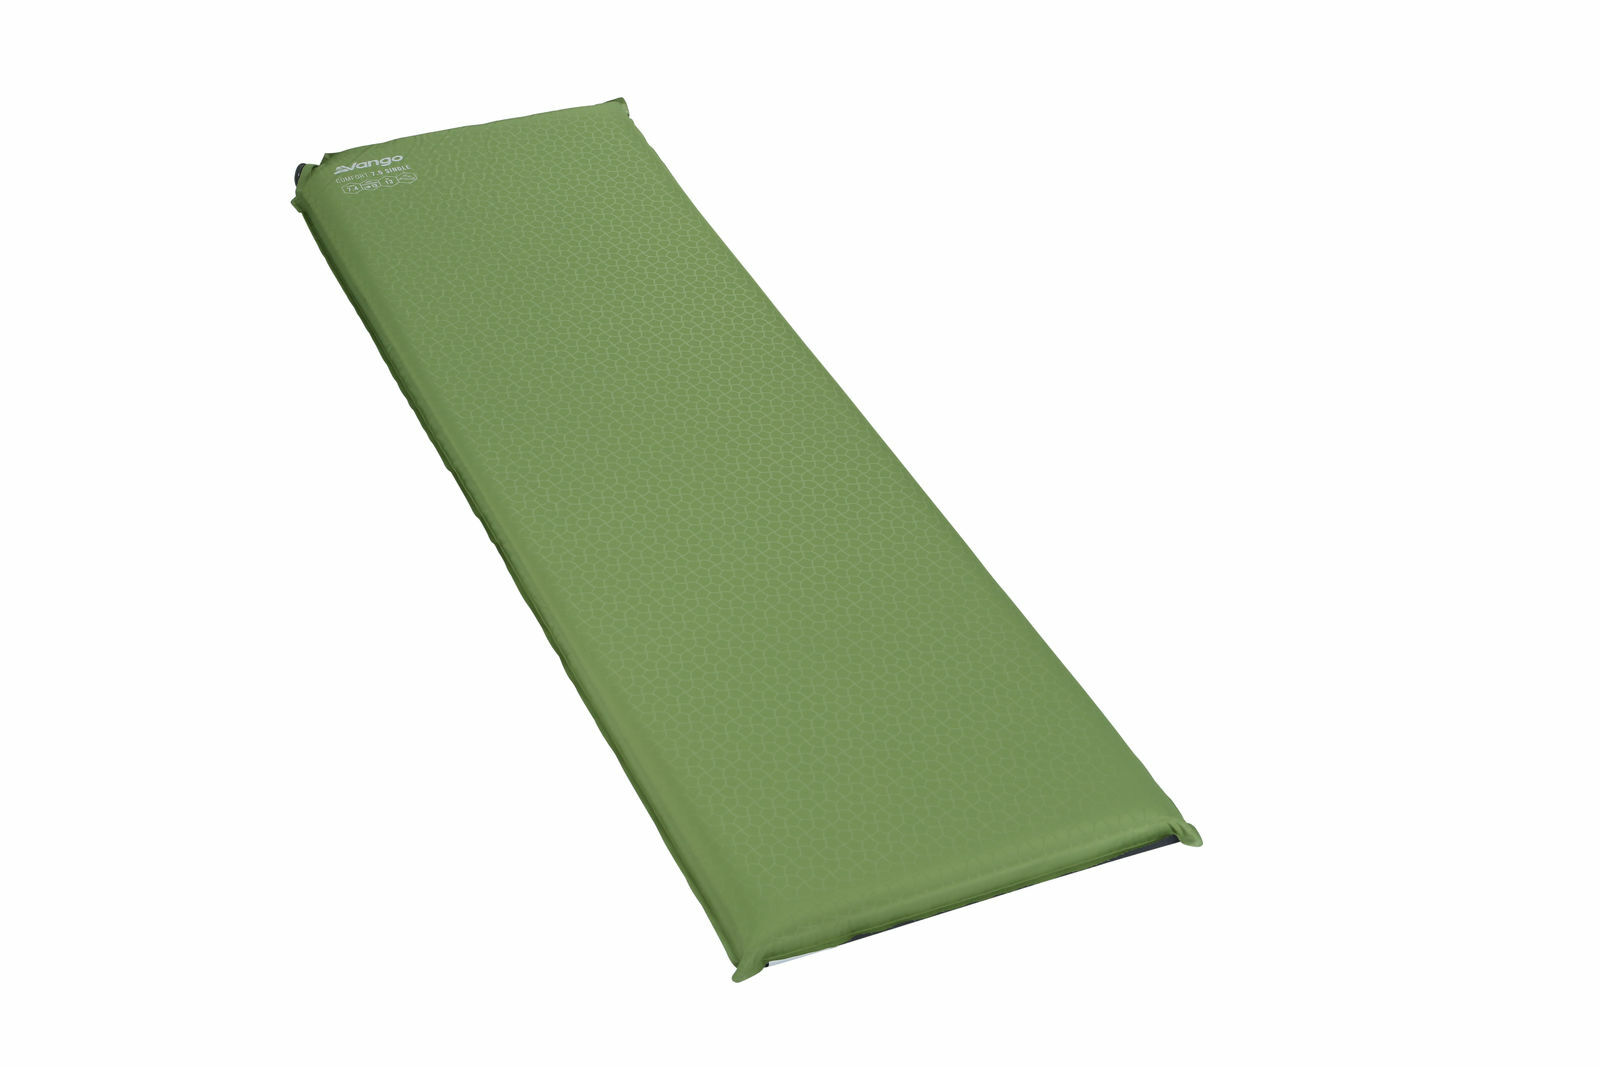 Three-quarter view of the Vango Comfort 7.5 Single Self-Inflating Mat in green.